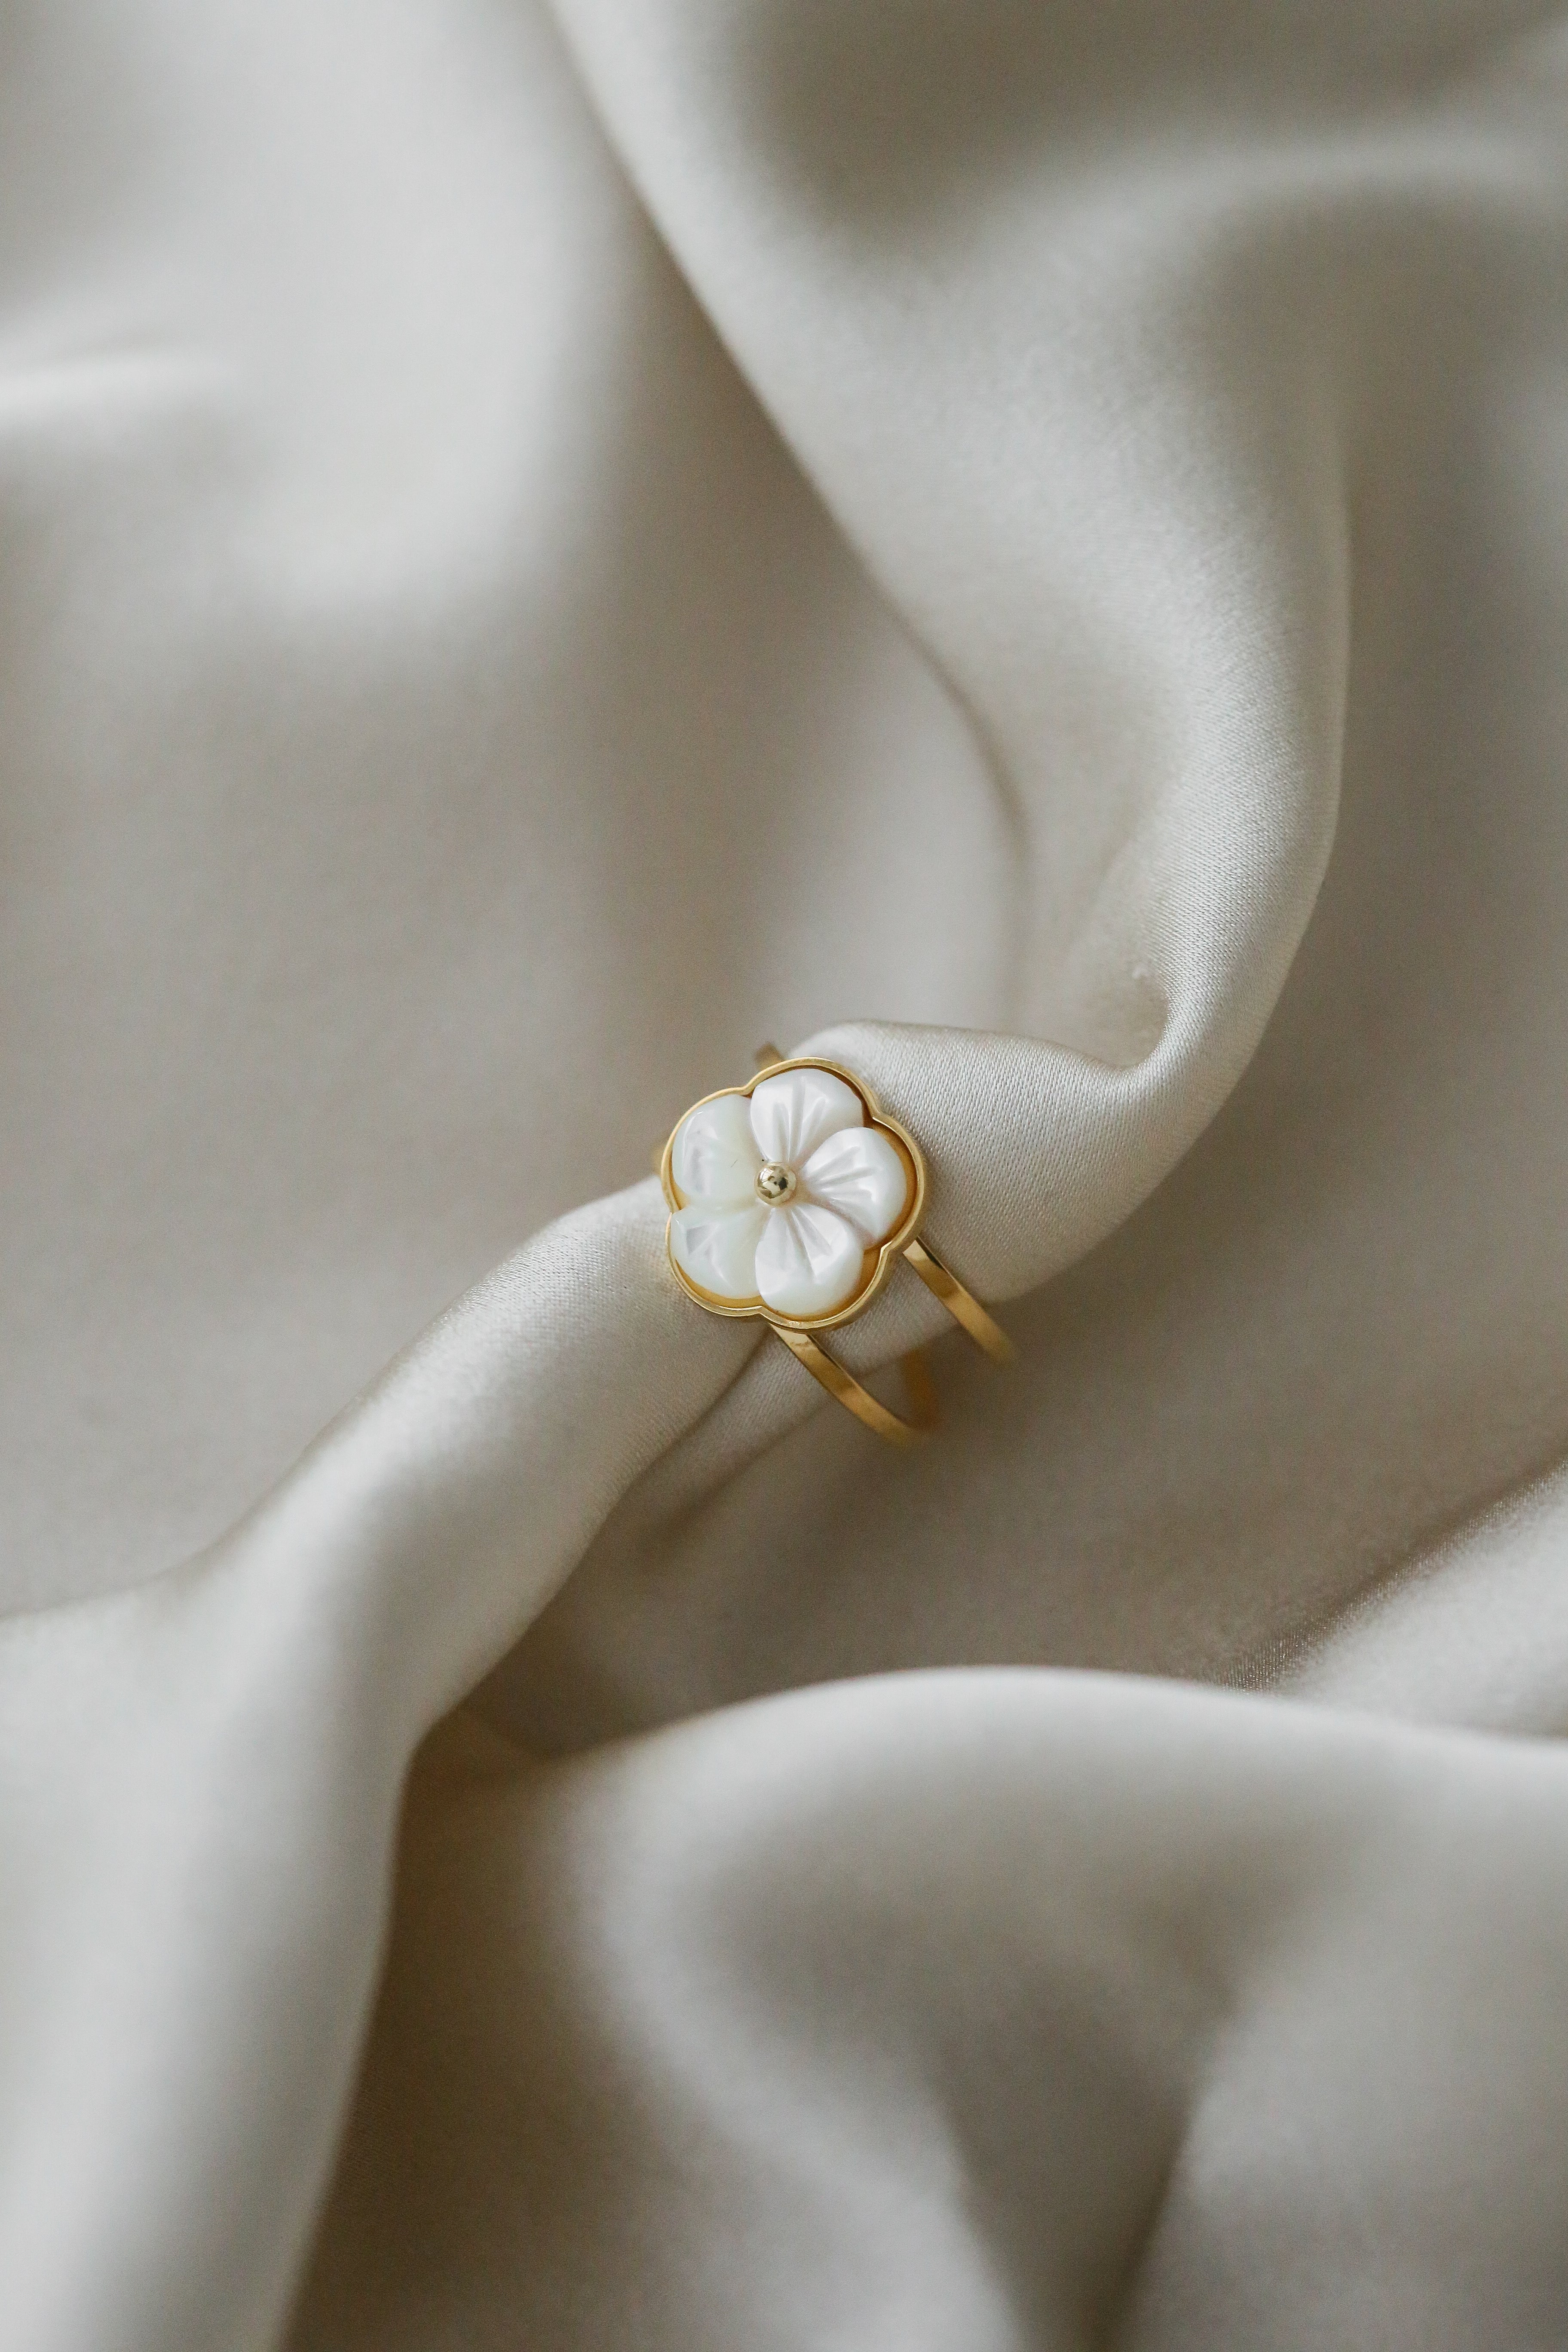 Venus Ring - Boutique Minimaliste has waterproof, durable, elegant and vintage inspired jewelry